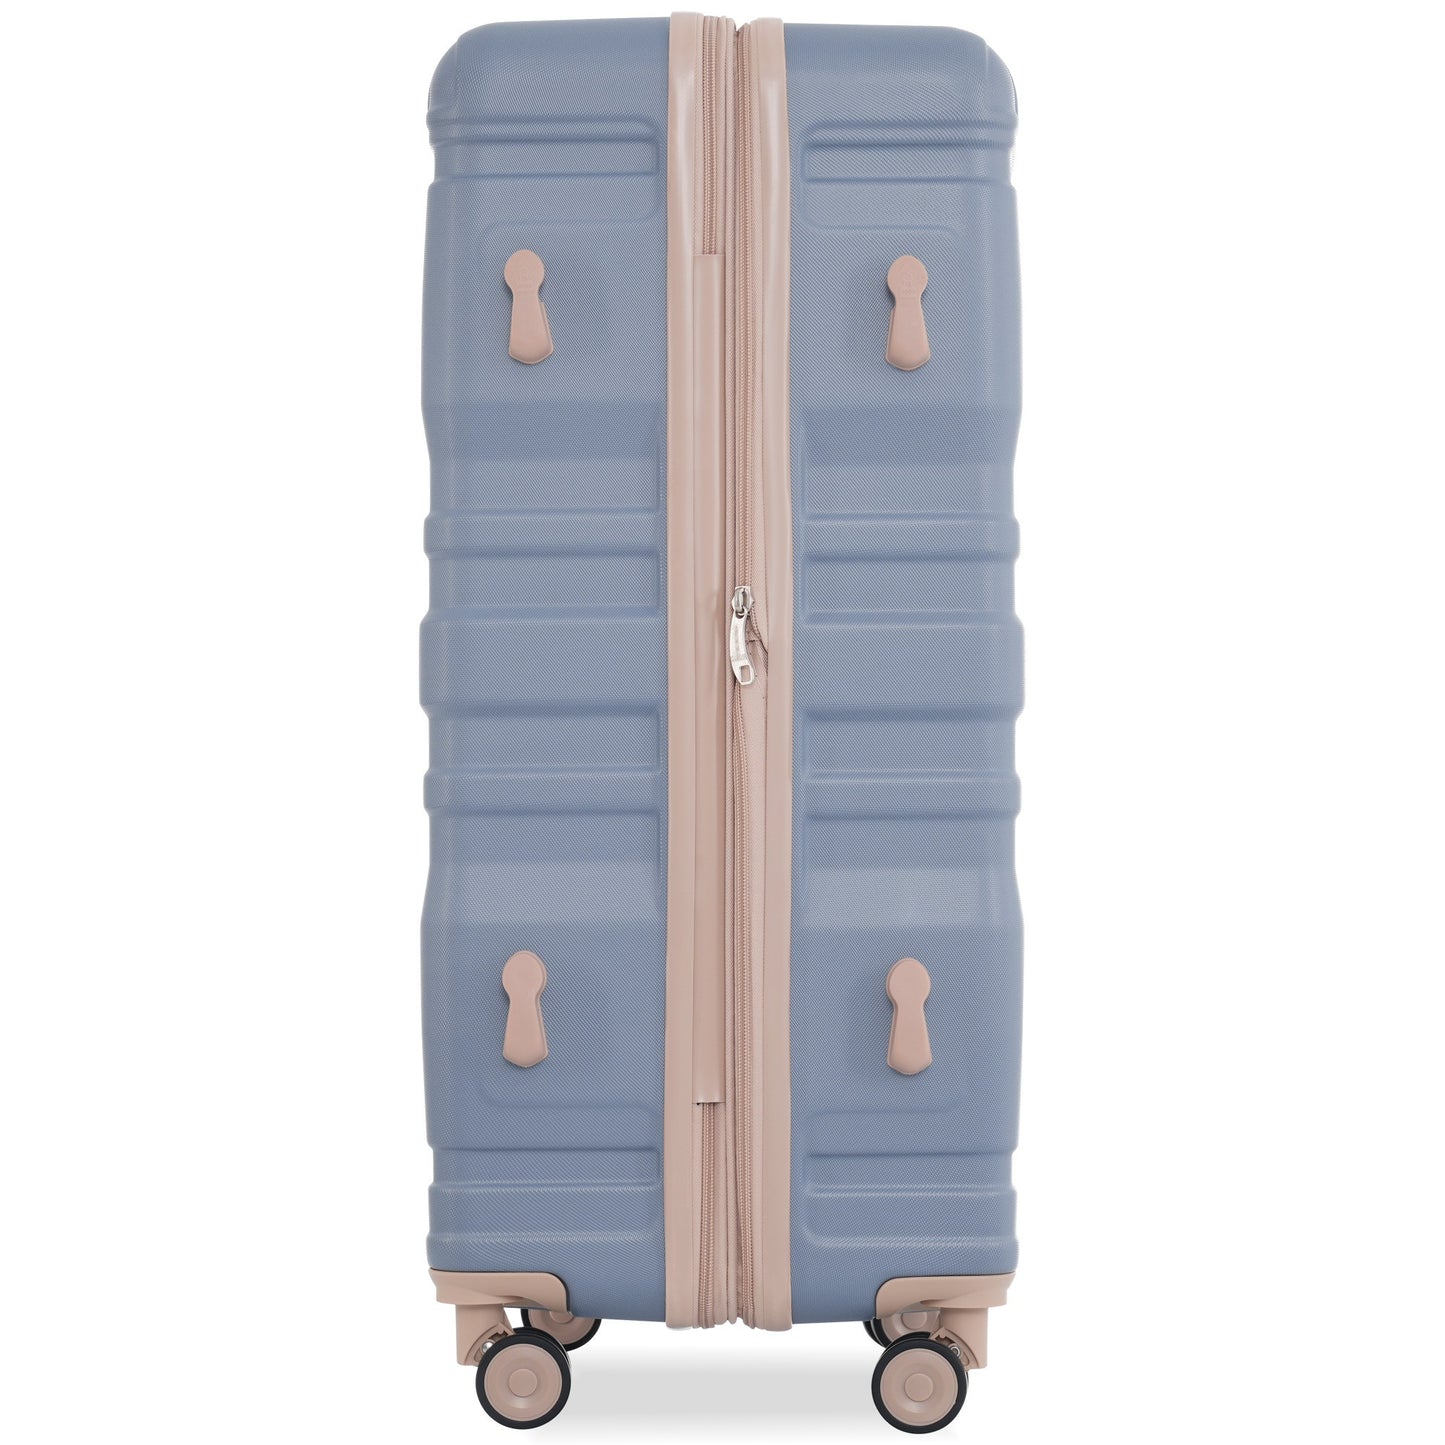 3Pc Hard Case Expandable Luggage Set (Light Blue And Golden)